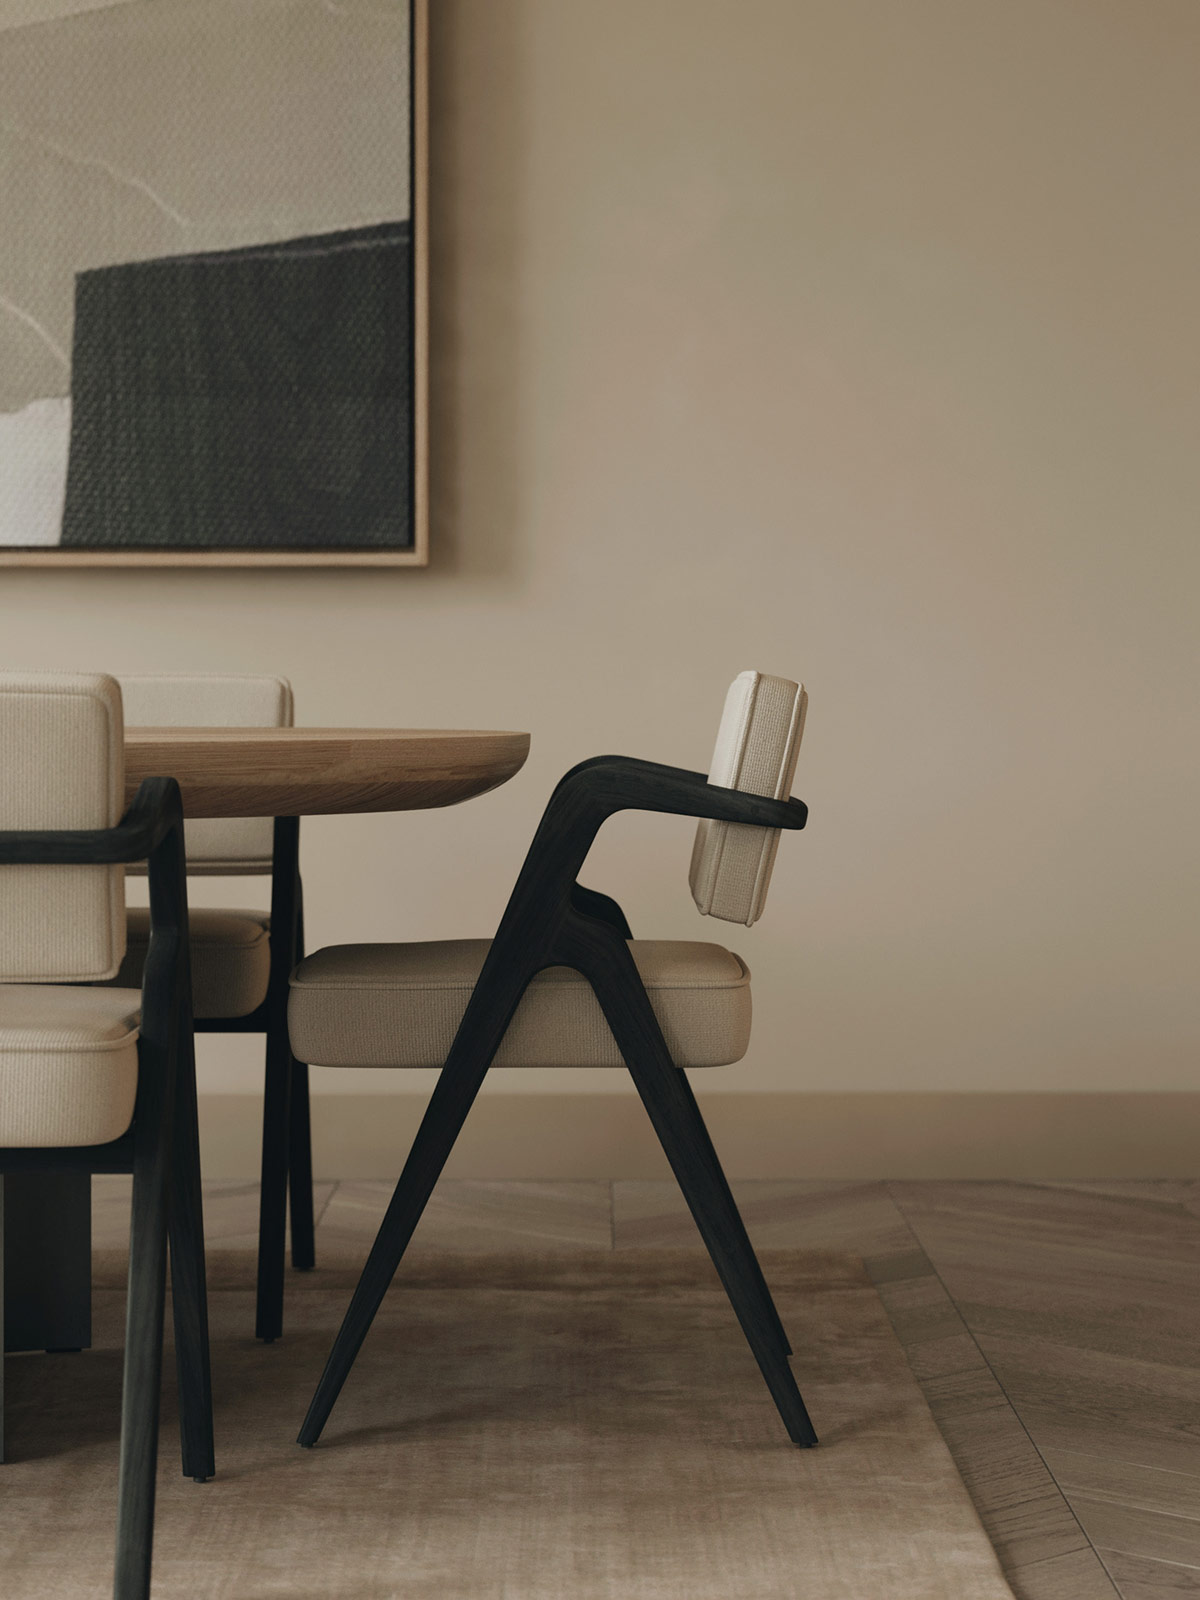 designer-modern-dining-chair-600x800.jpg